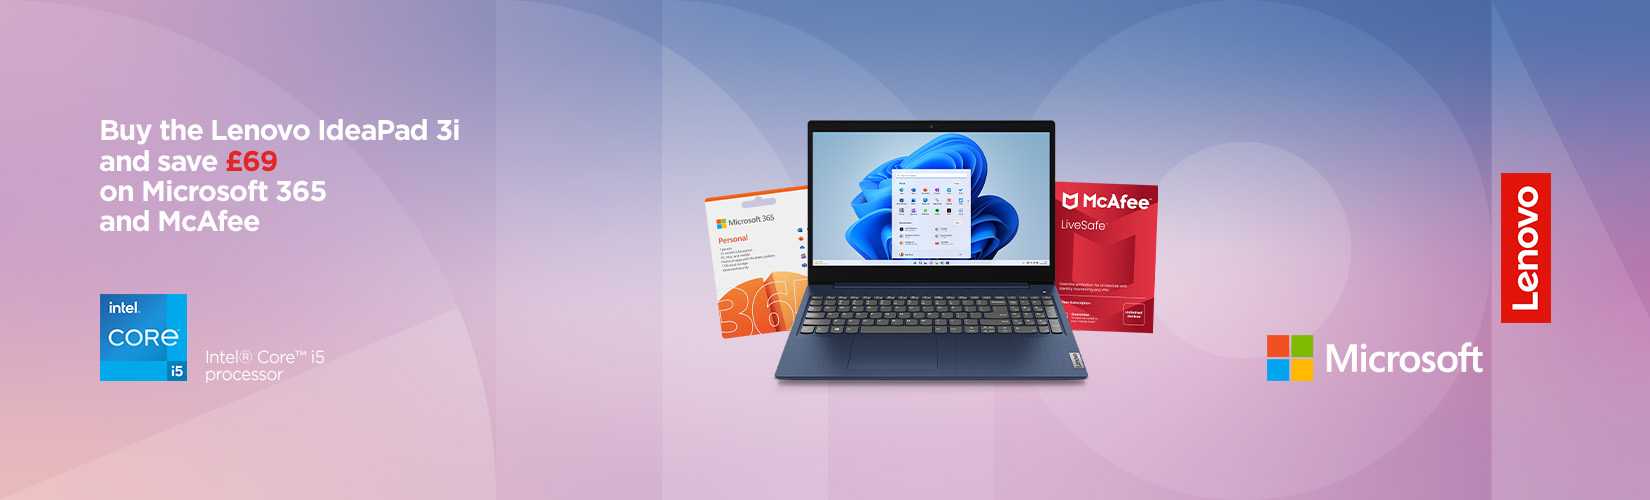 Buy the Lenovo IdeaPad 3i and share £69 on Microsoft 365 and McAfee.